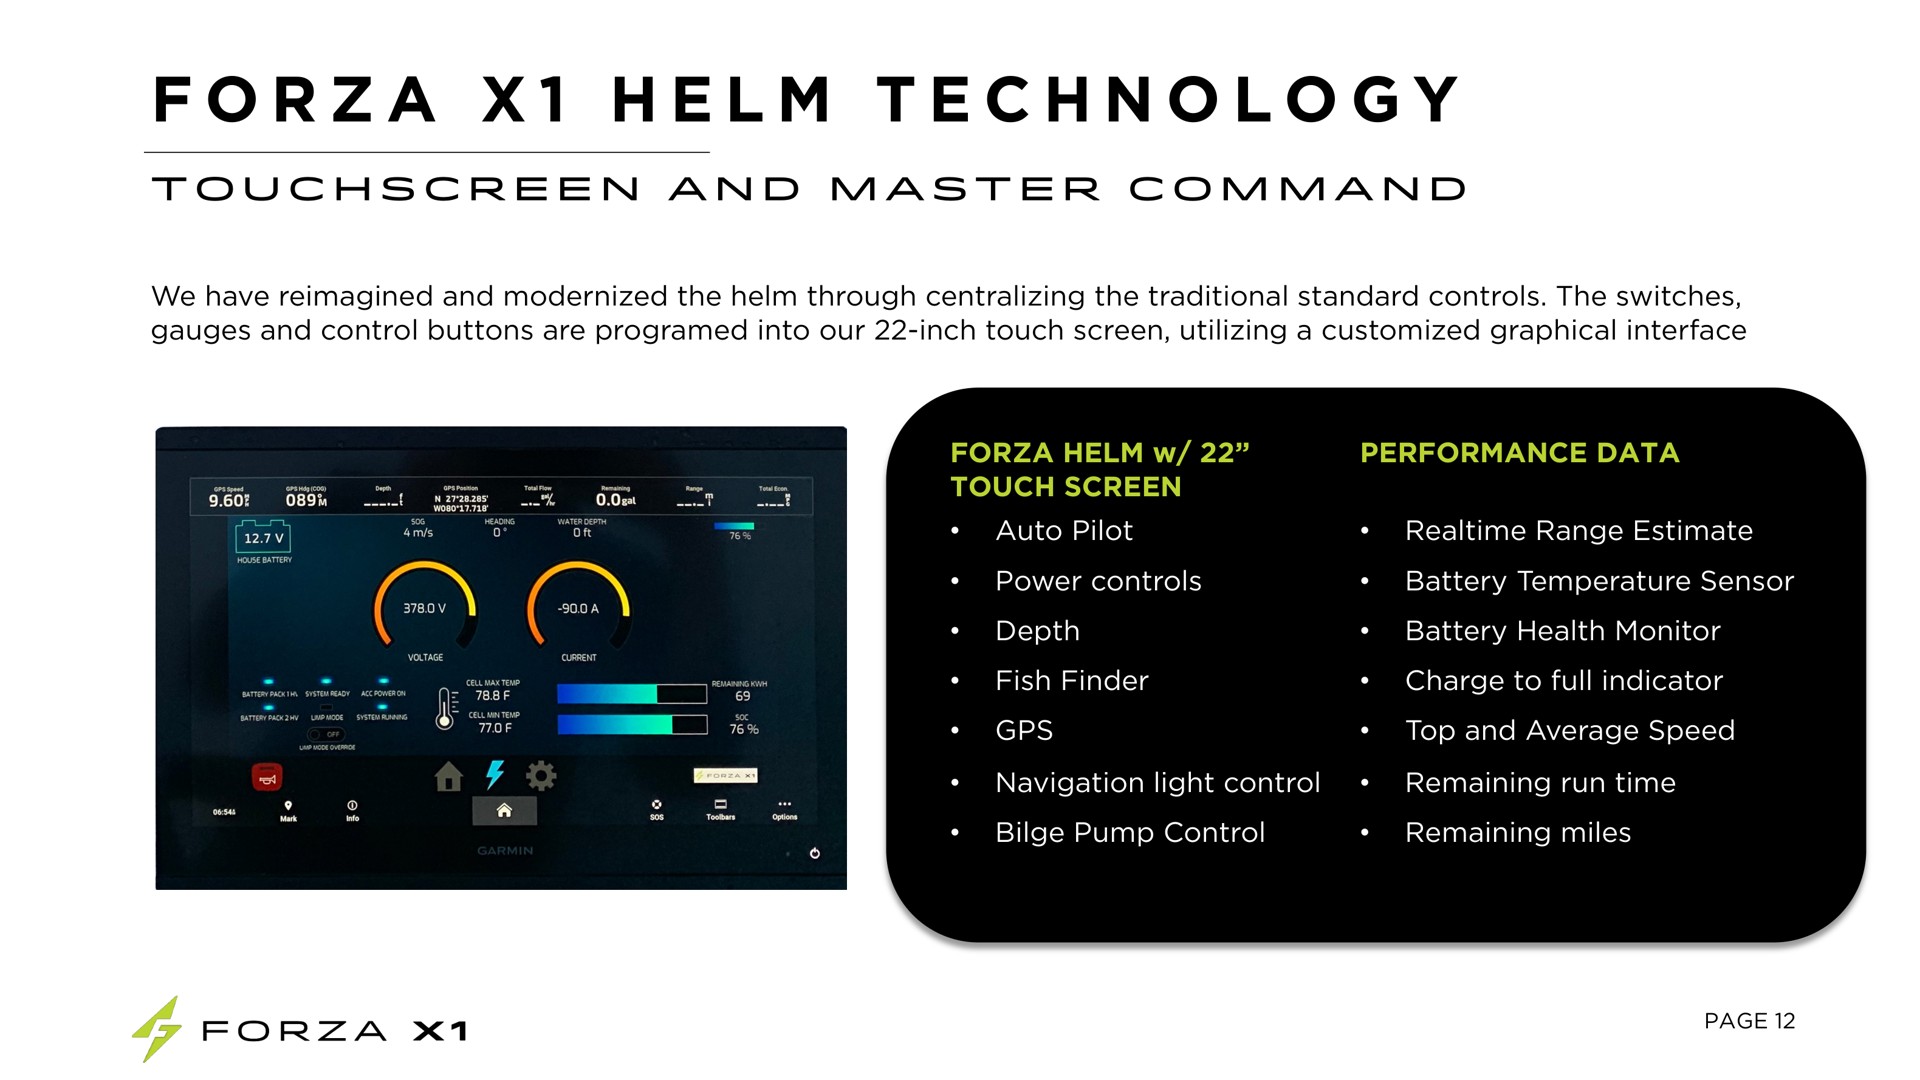 a helm technology | Forza X1